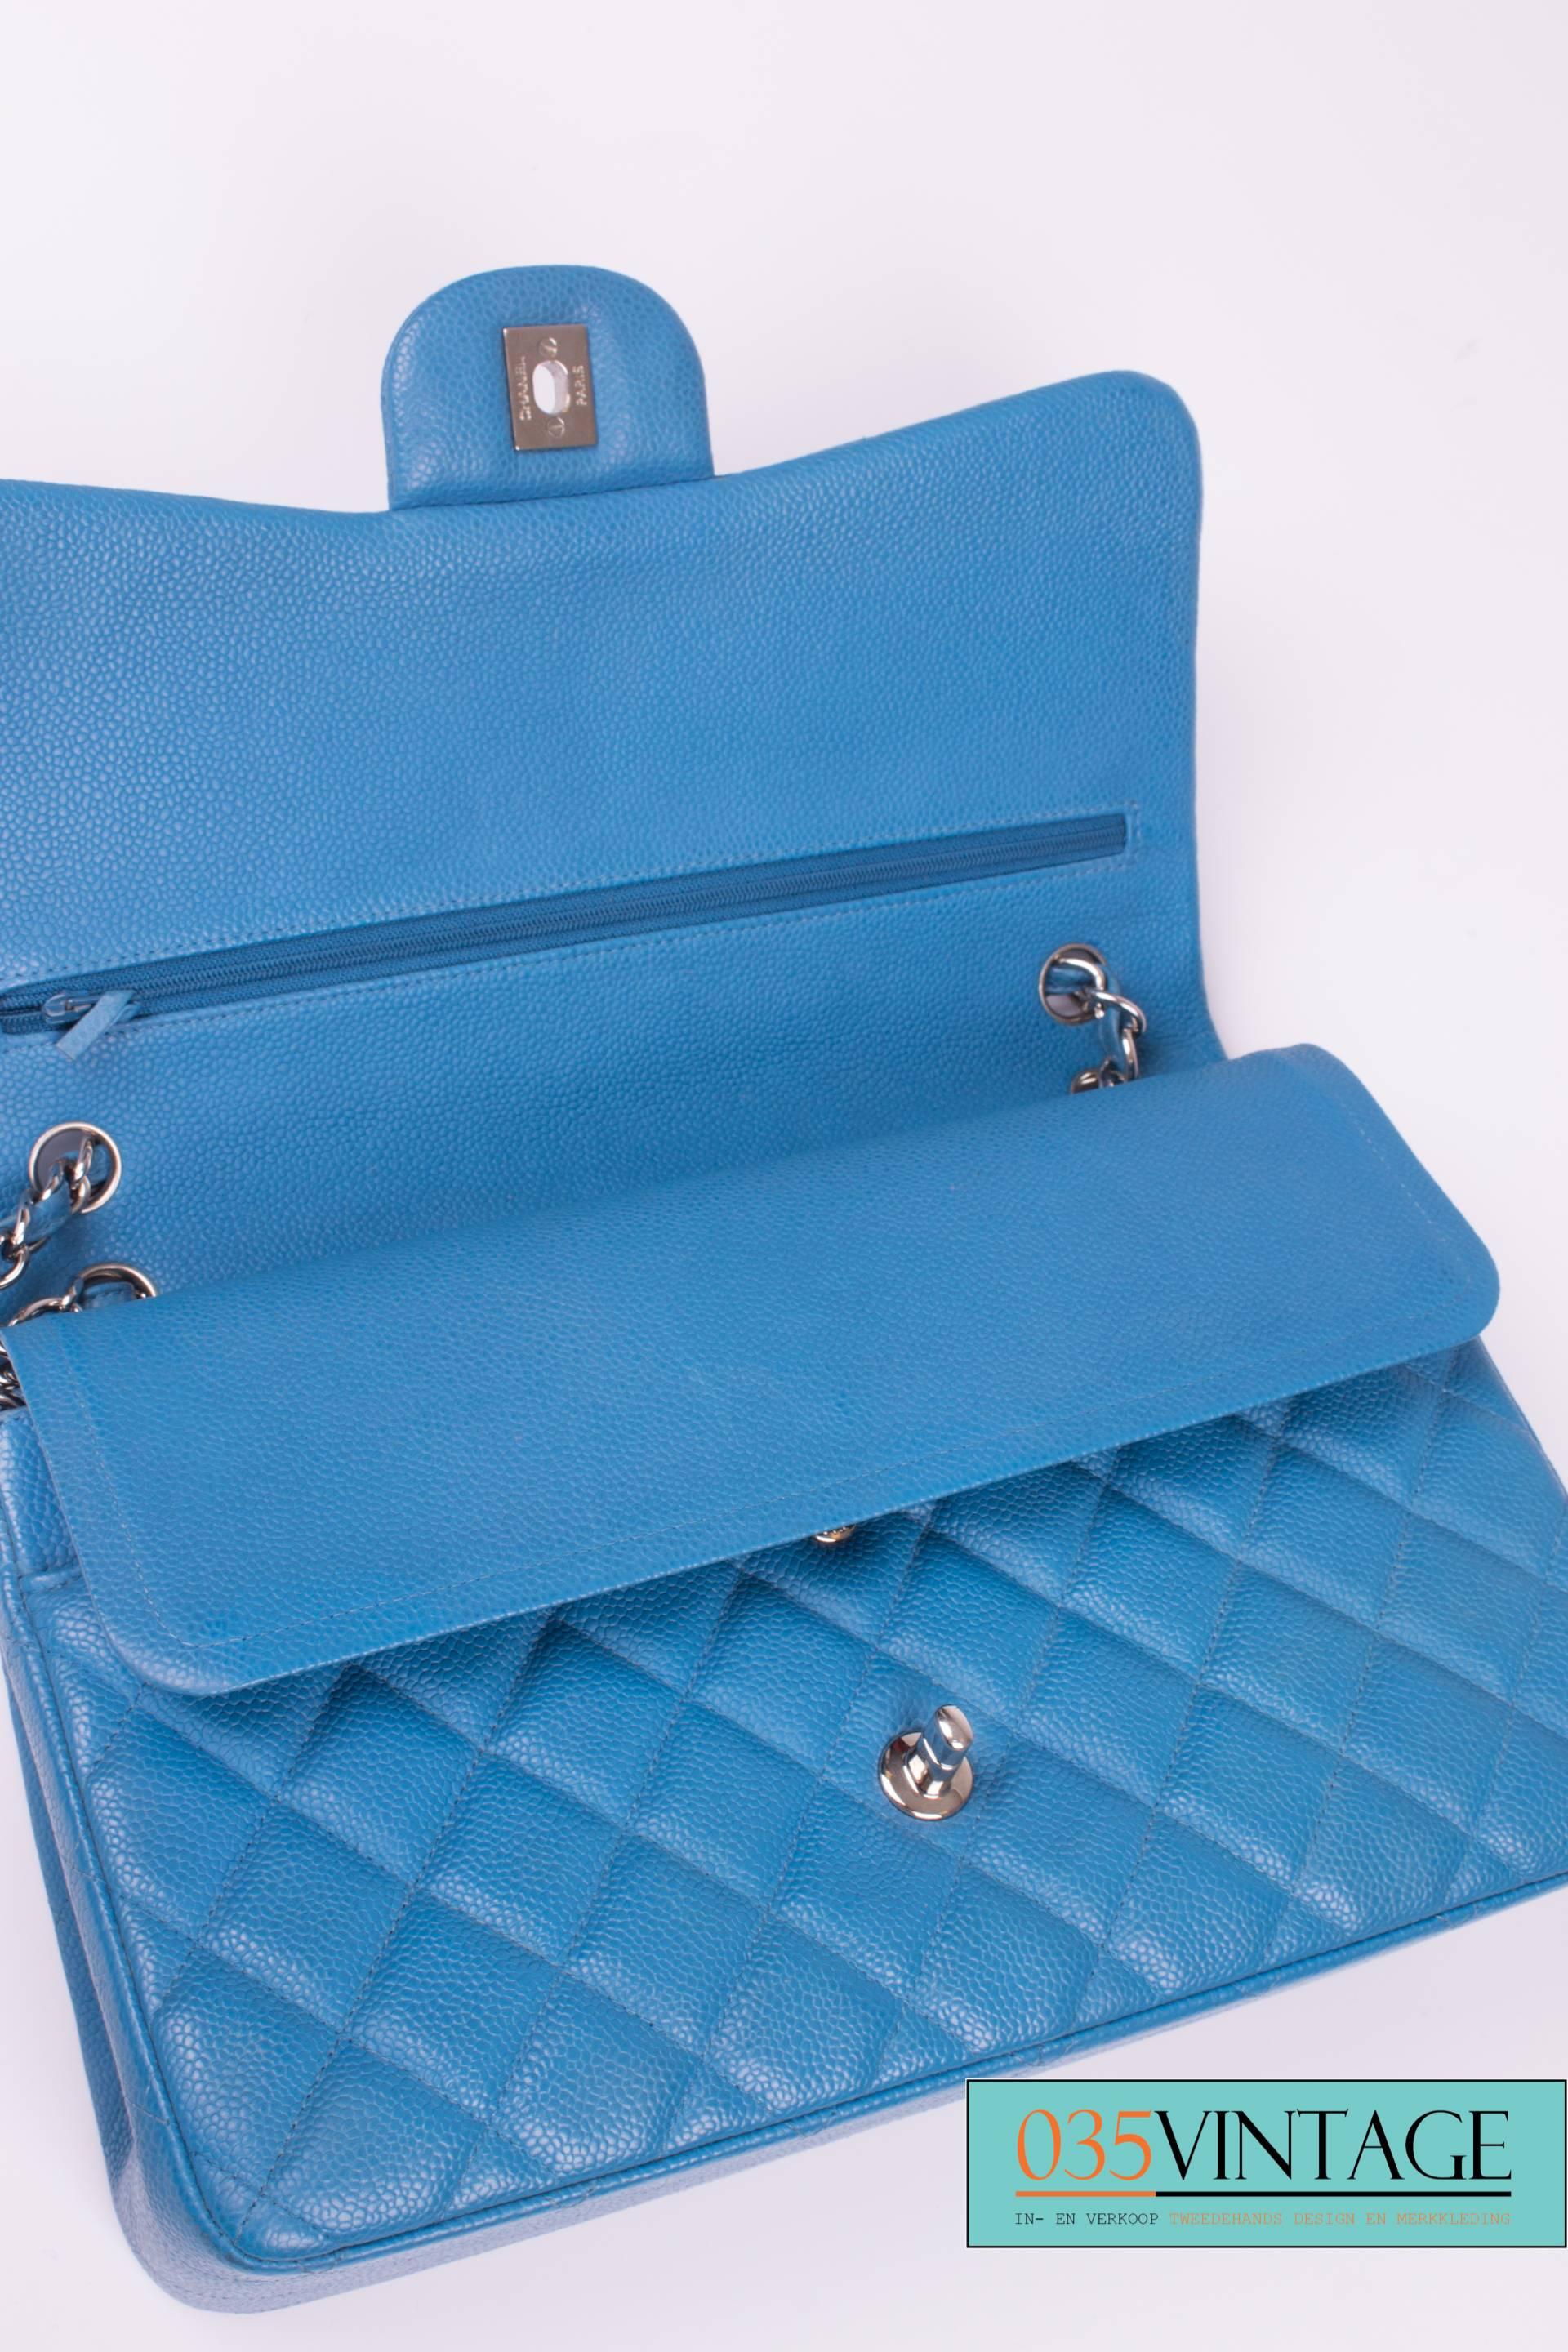 Chanel 2.55 Timeless Jumbo Double Flap Bag - blue caviar leather  2